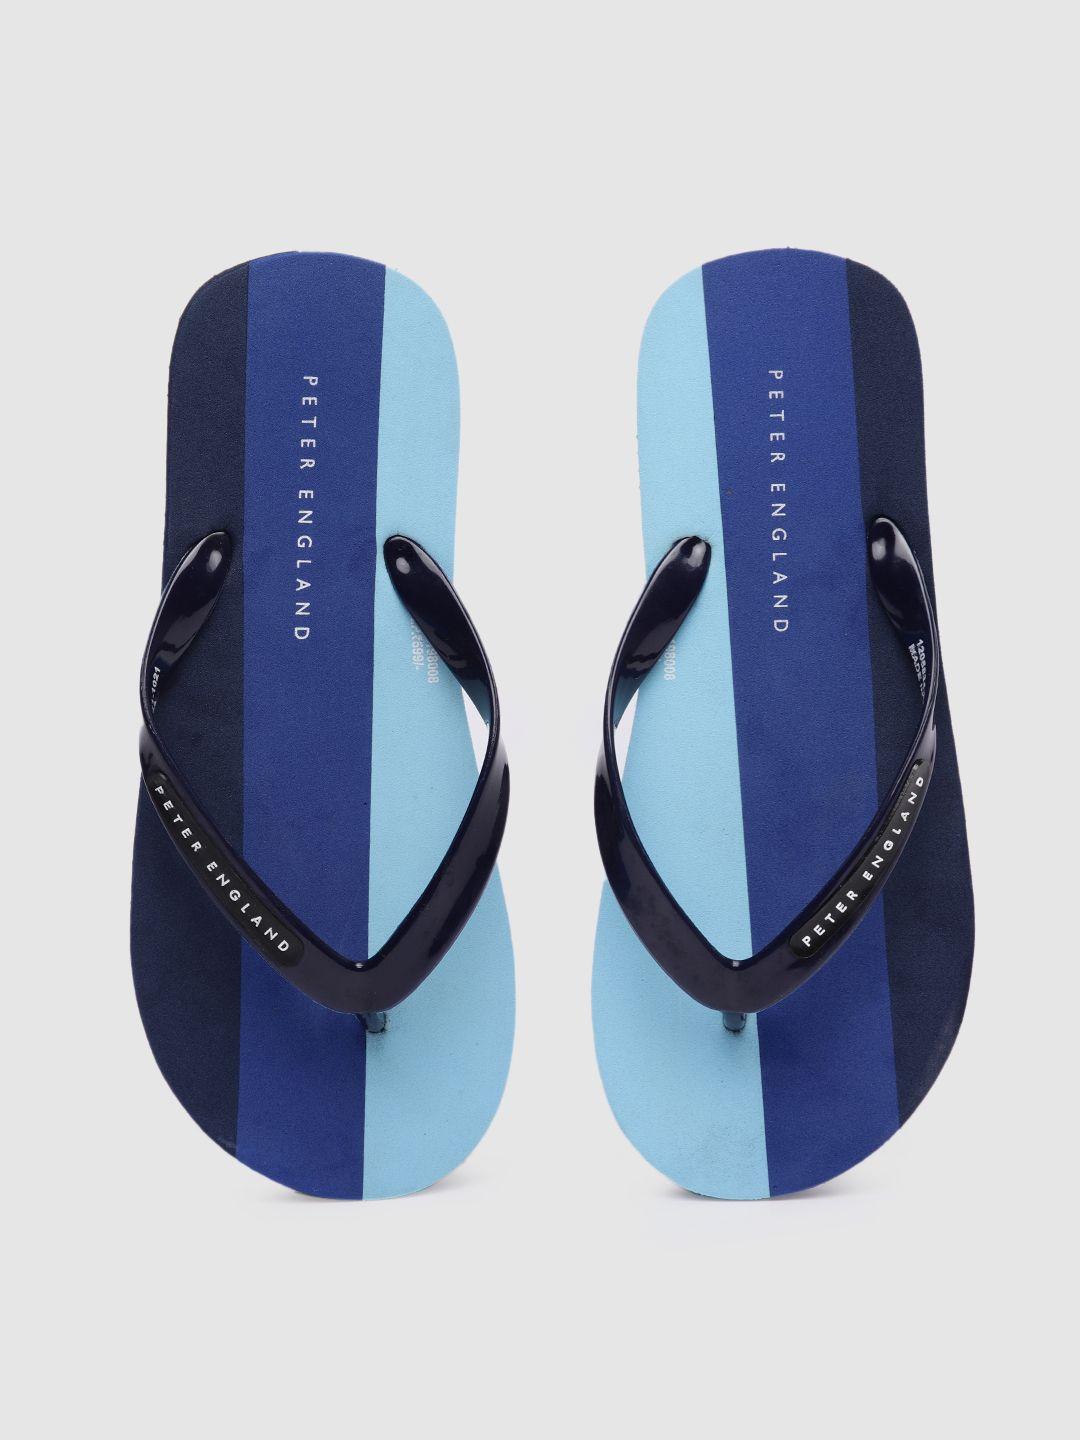 peter england men blue colourblocked rubber thong flip-flops with brand logo printed